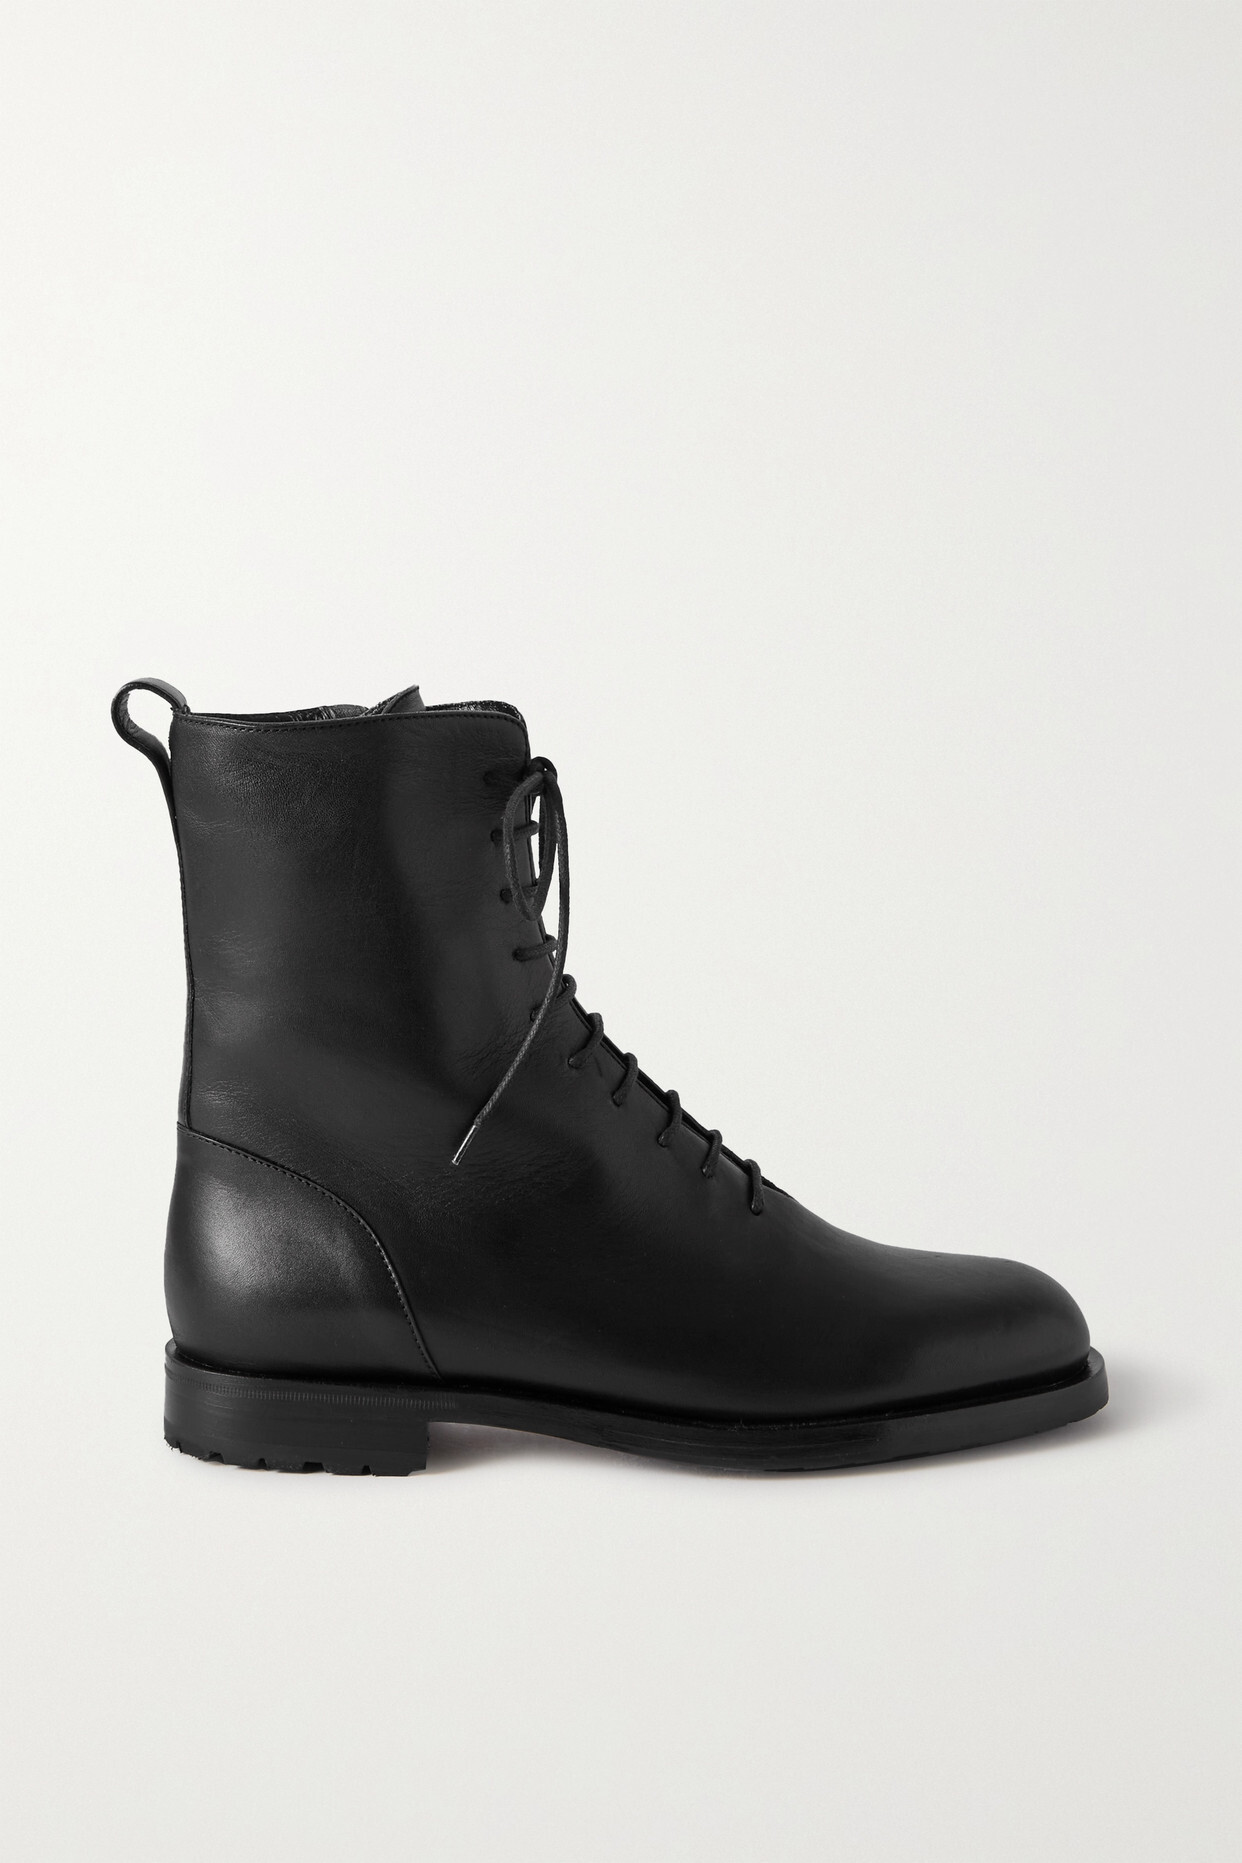 Manolo Blahnik - Planigia Leather Ankle Boots - Black